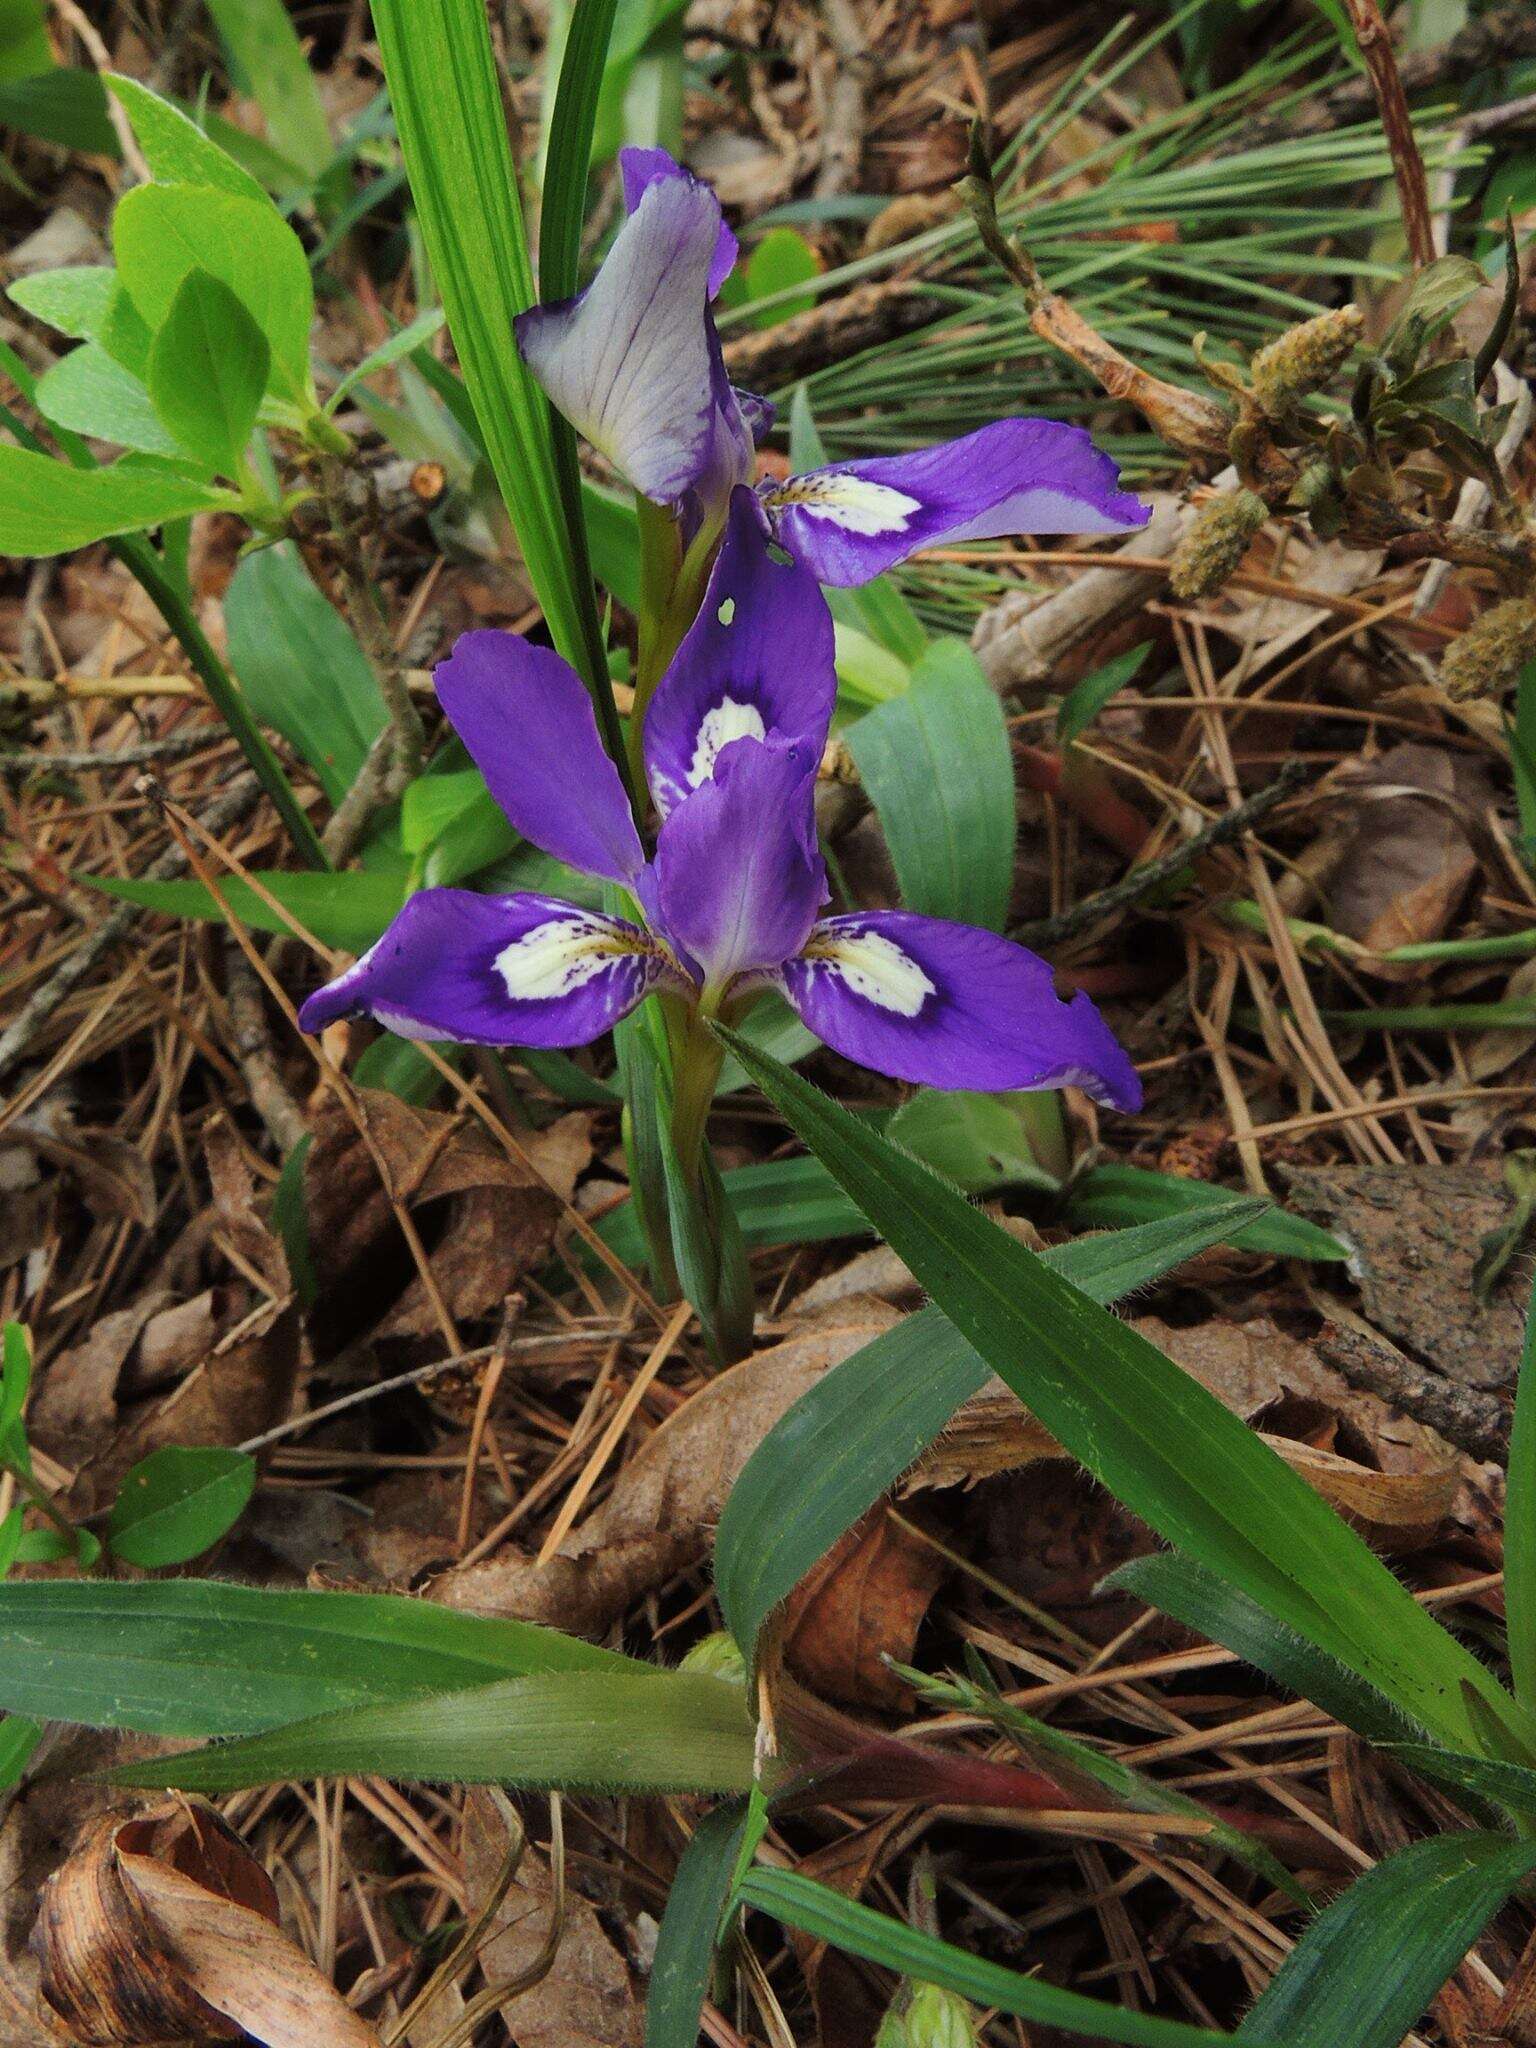 Image of long-tail iris